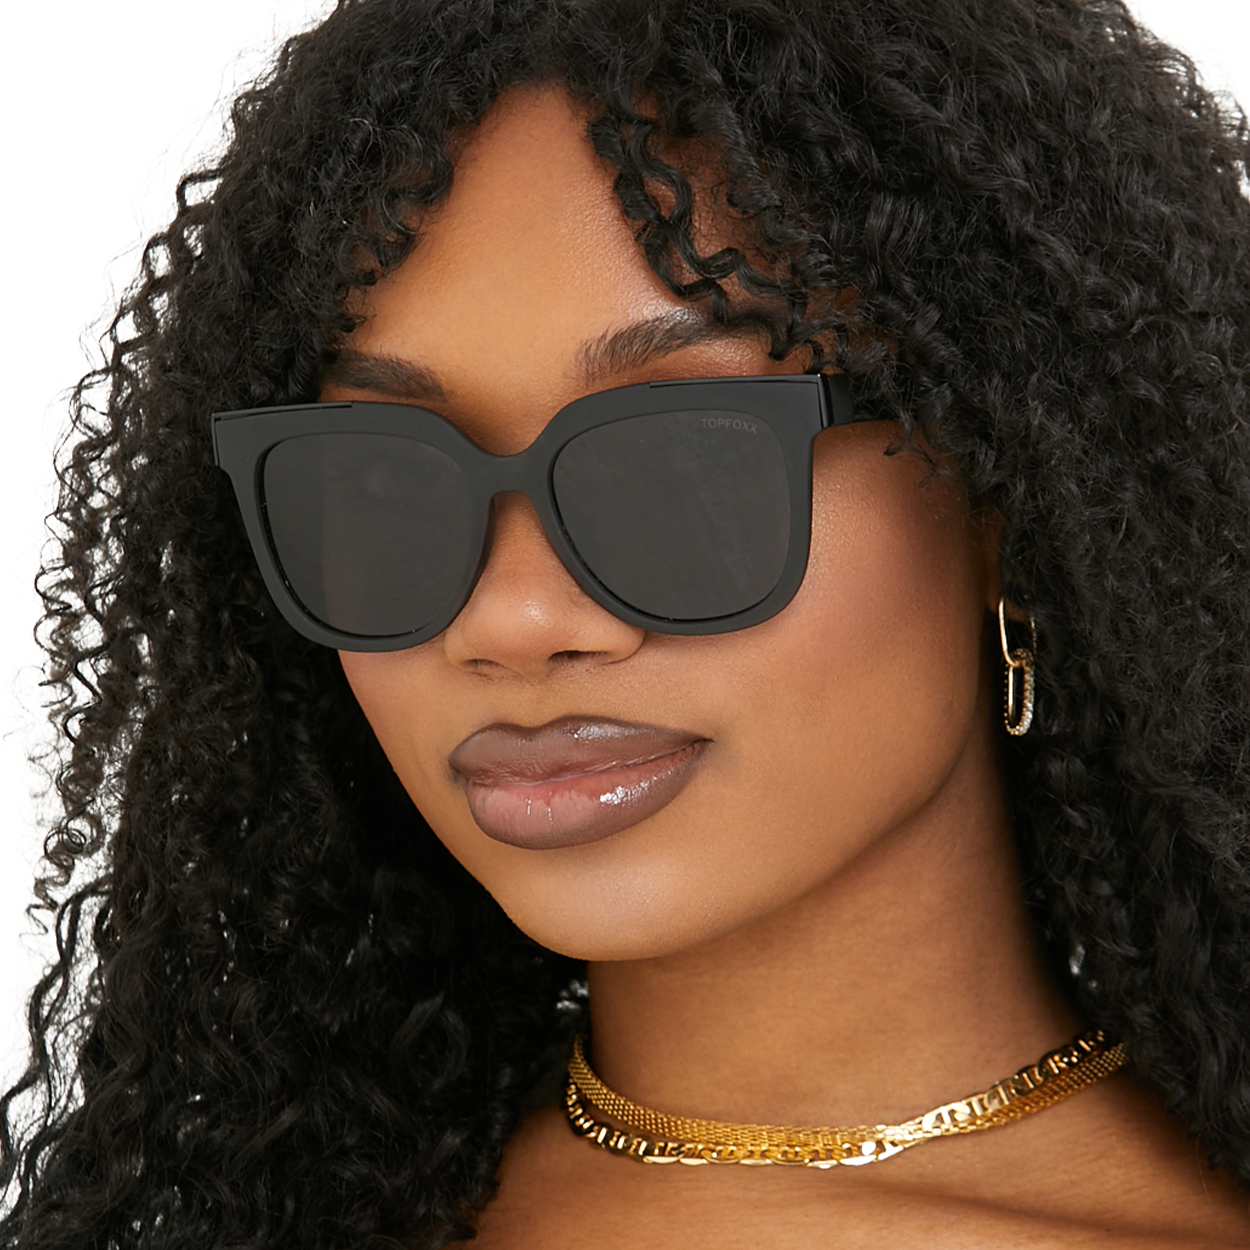 Coco - Sustainable Black Frame Black Lens Wayfarer Sunglasses